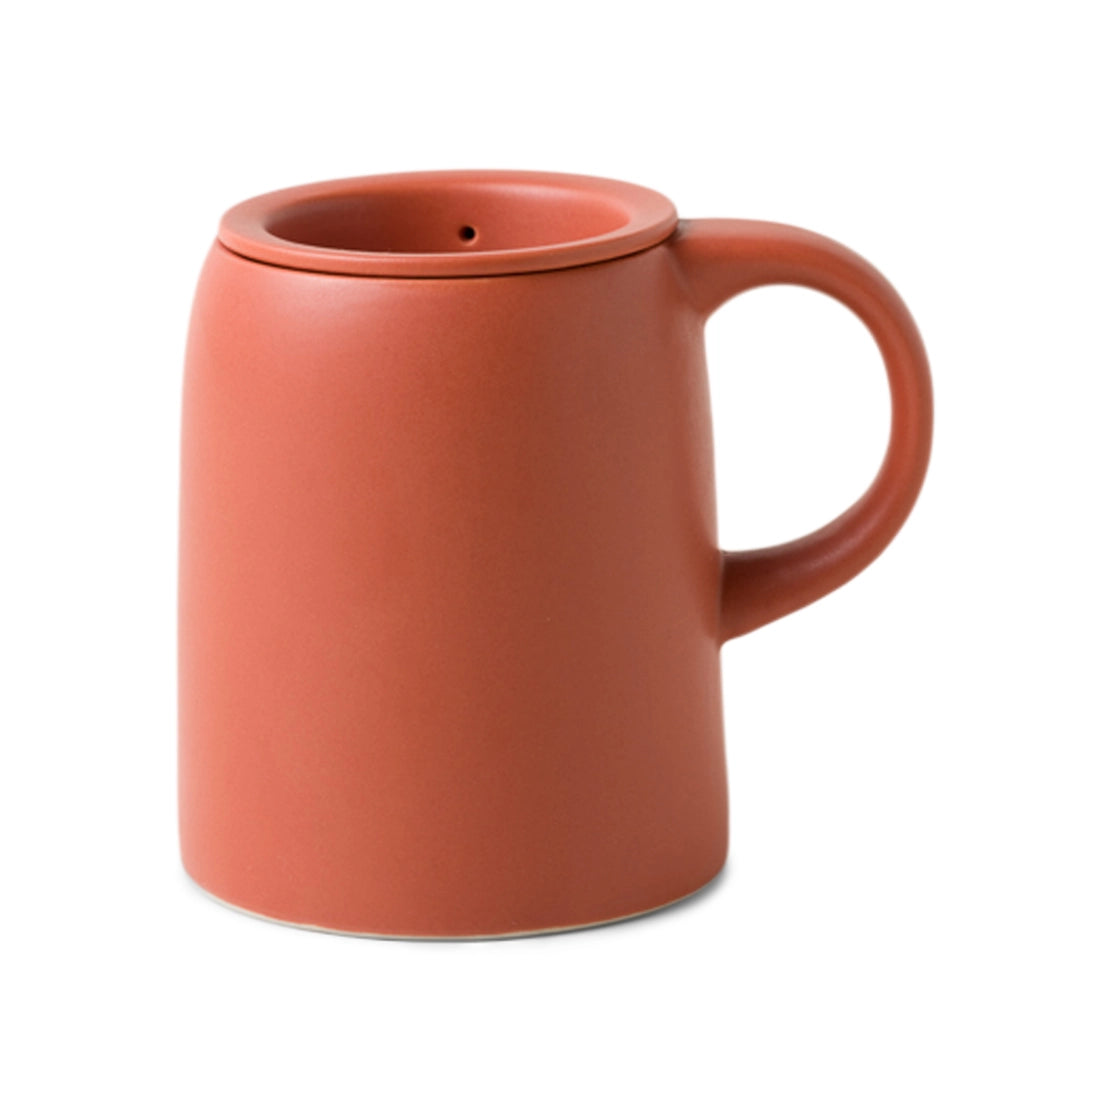 The Ceramic Tea Infuser Mug by Good Citizen